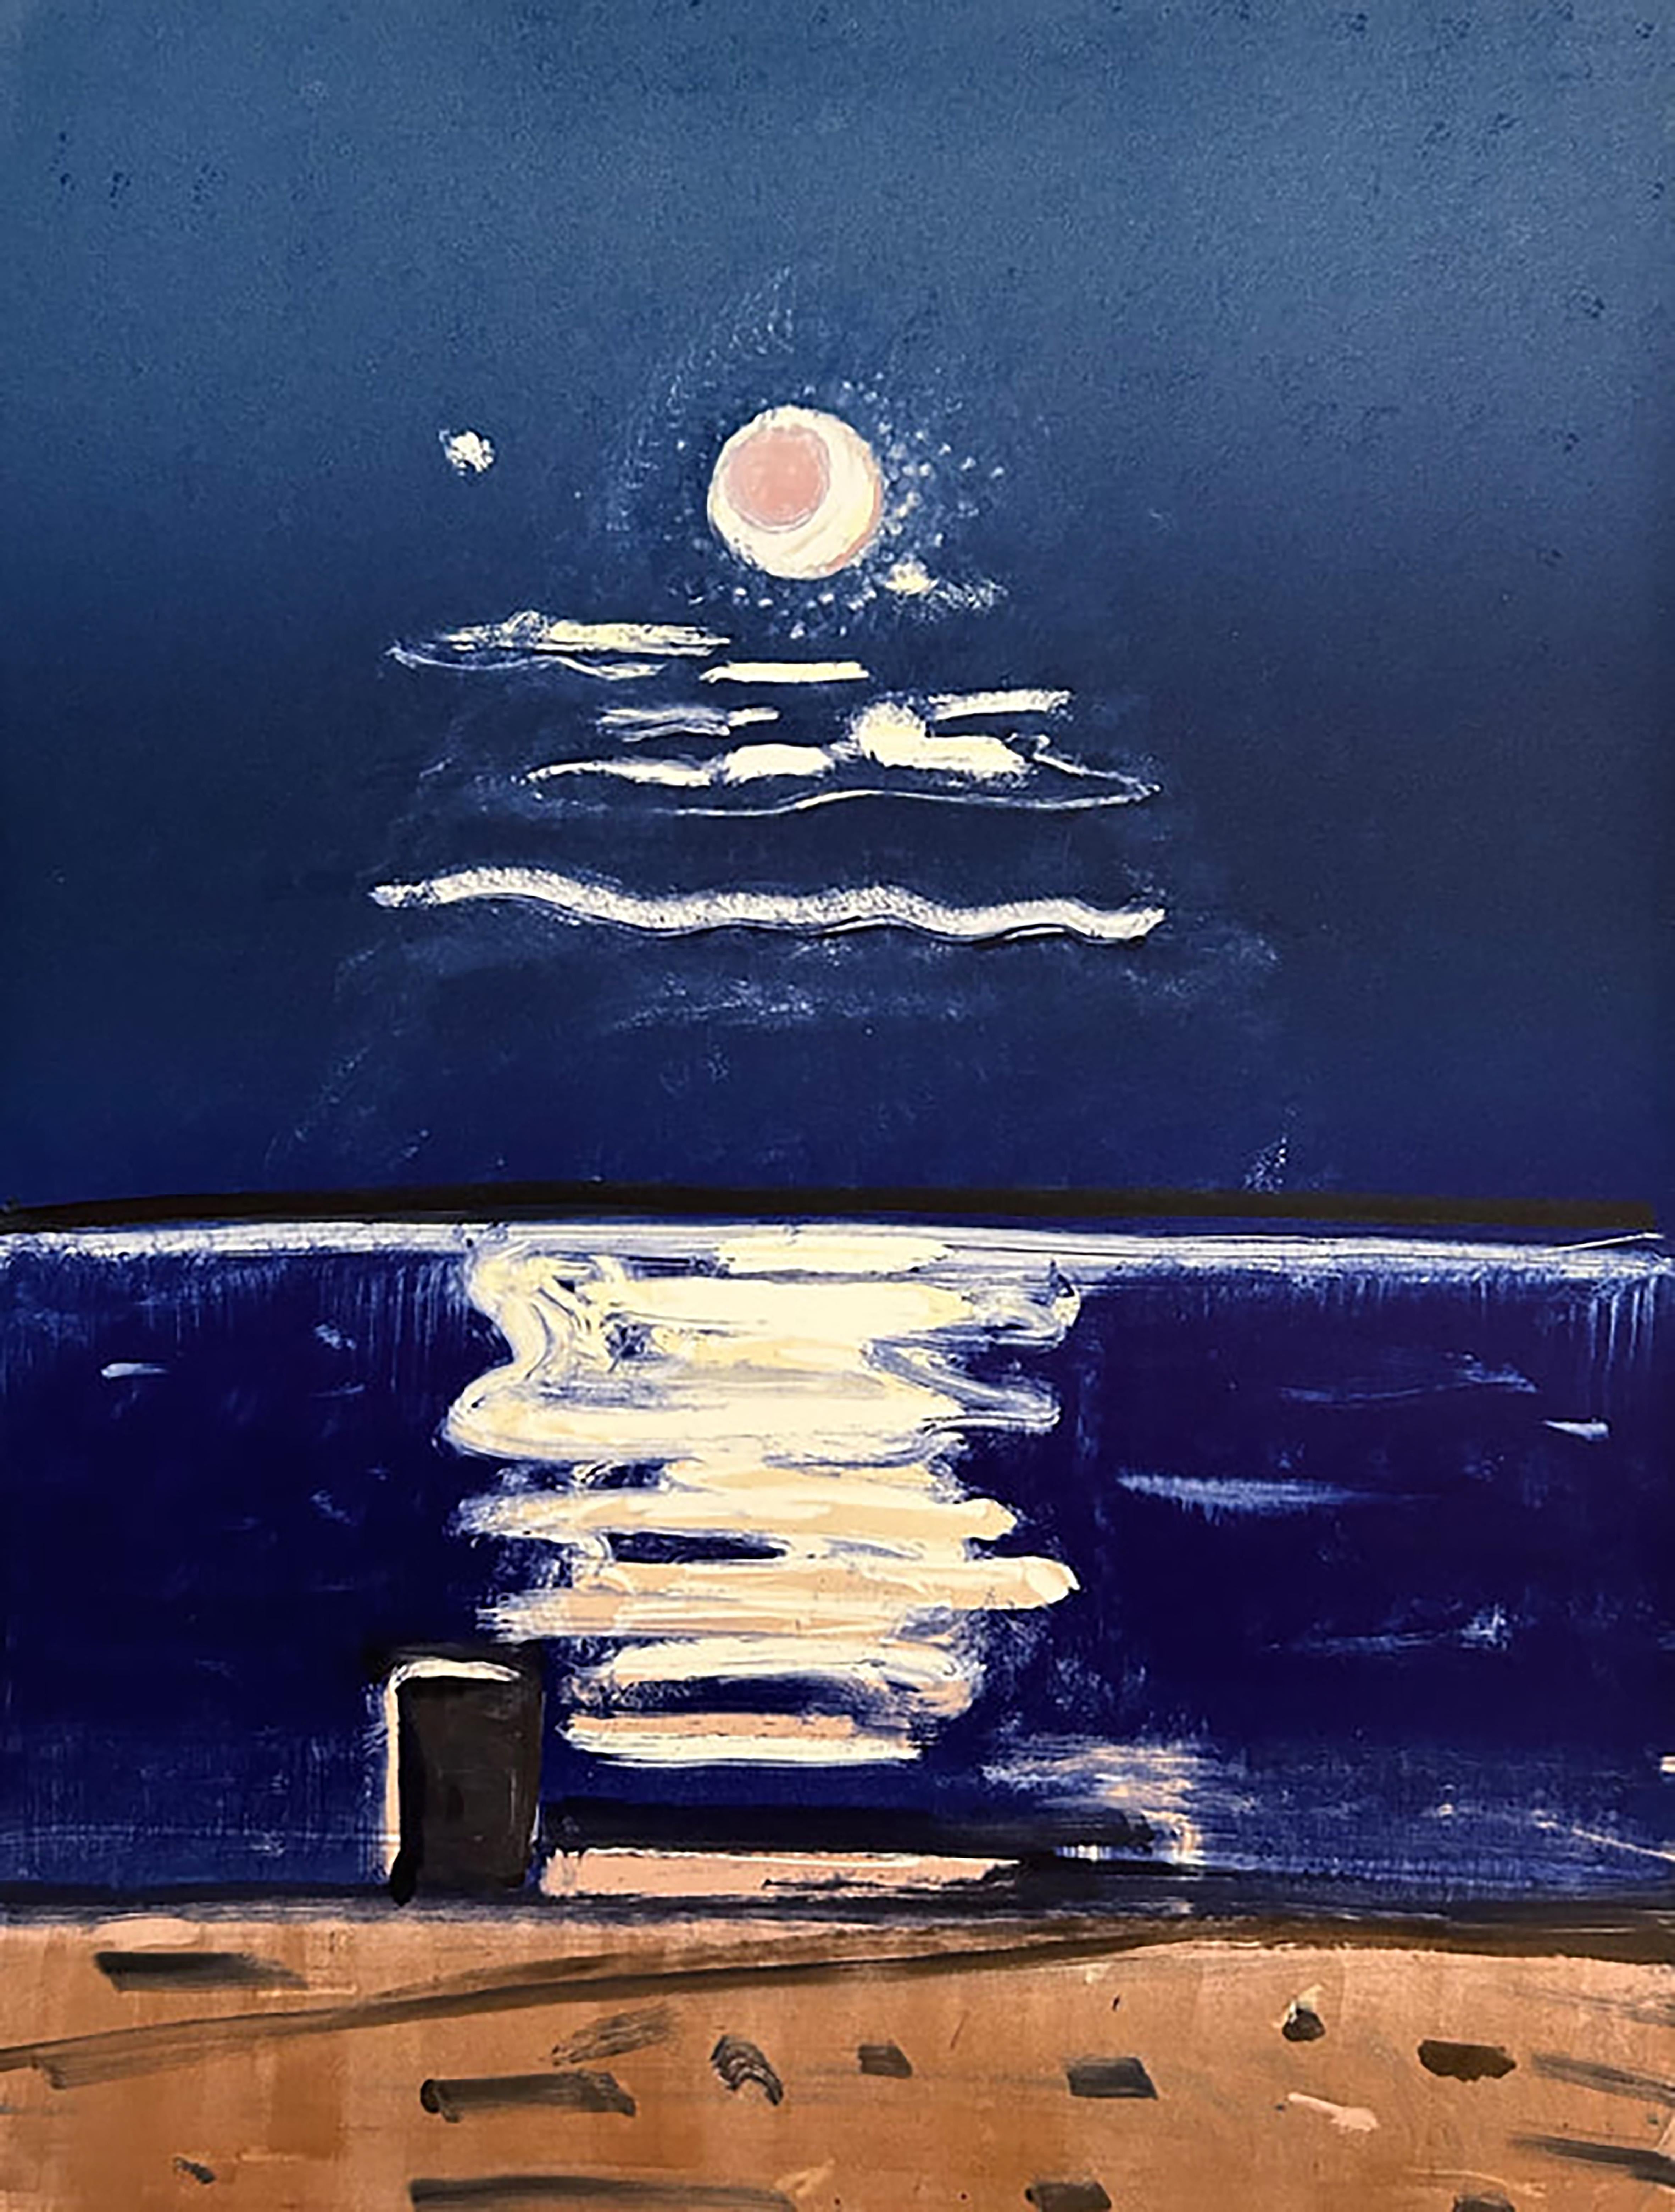 Moonlight on Water #2